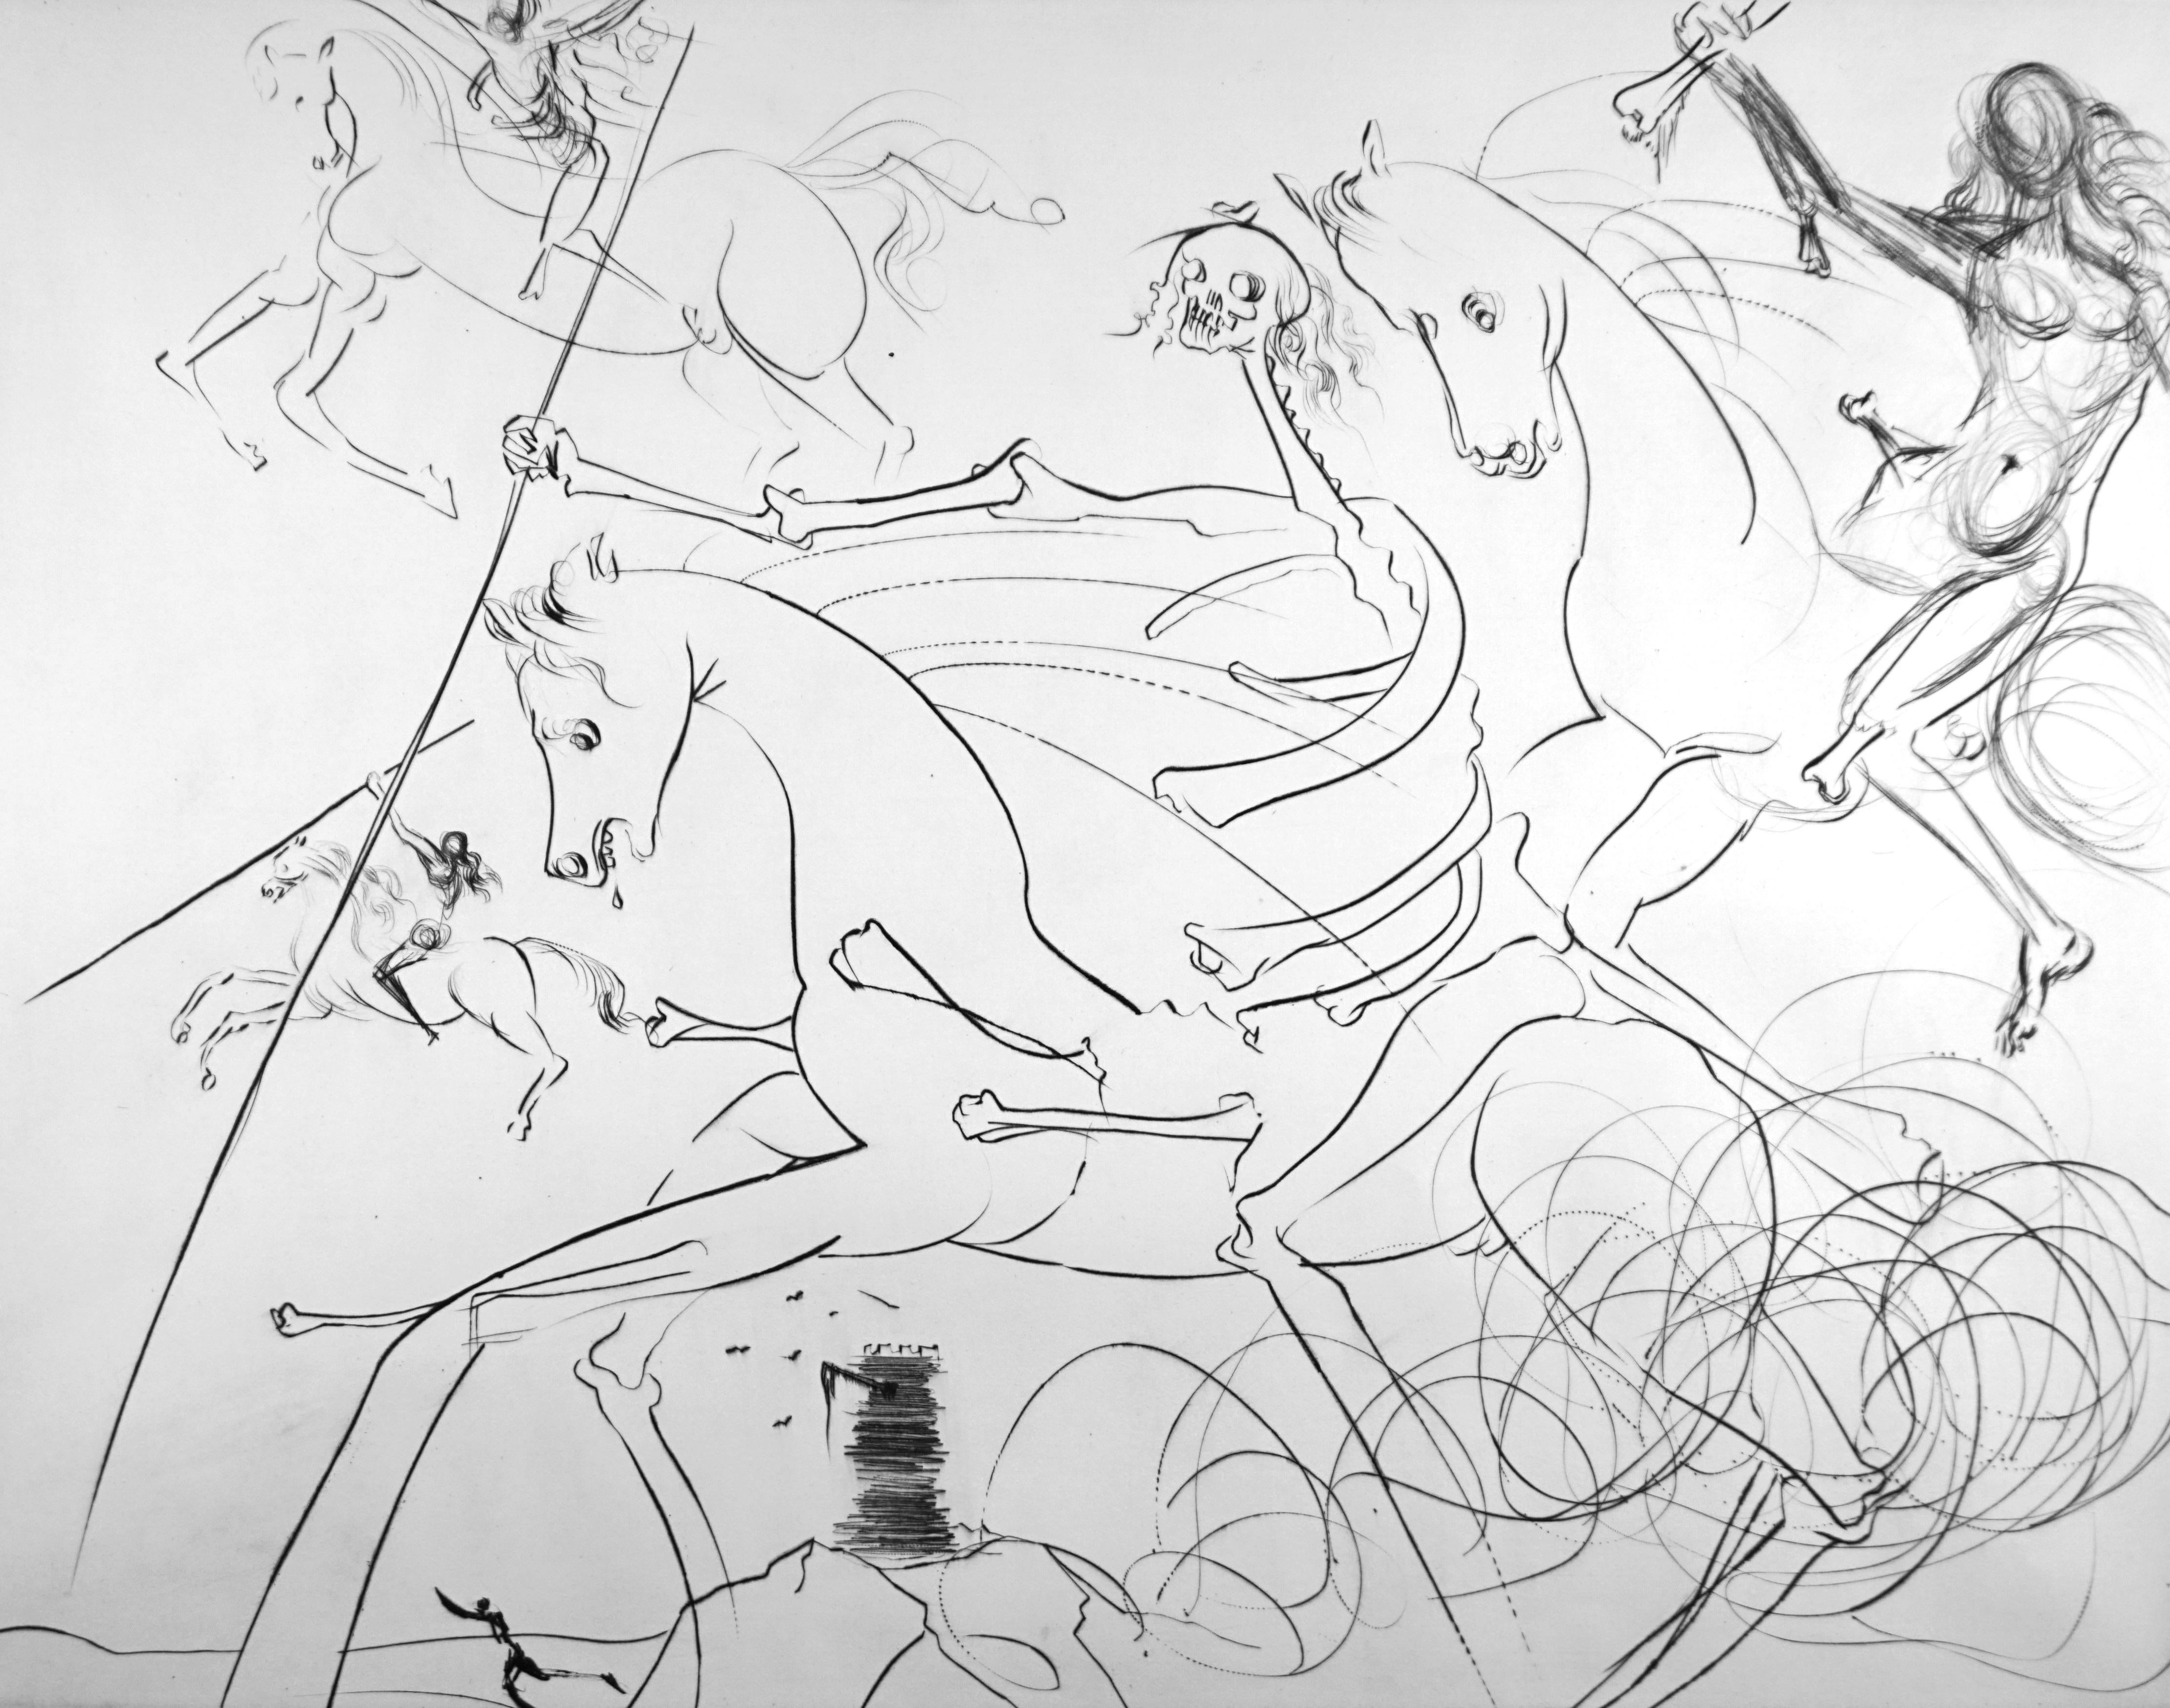 Apocalyptische Reiter (Apocalyptic Rider) - Print by Salvador Dalí